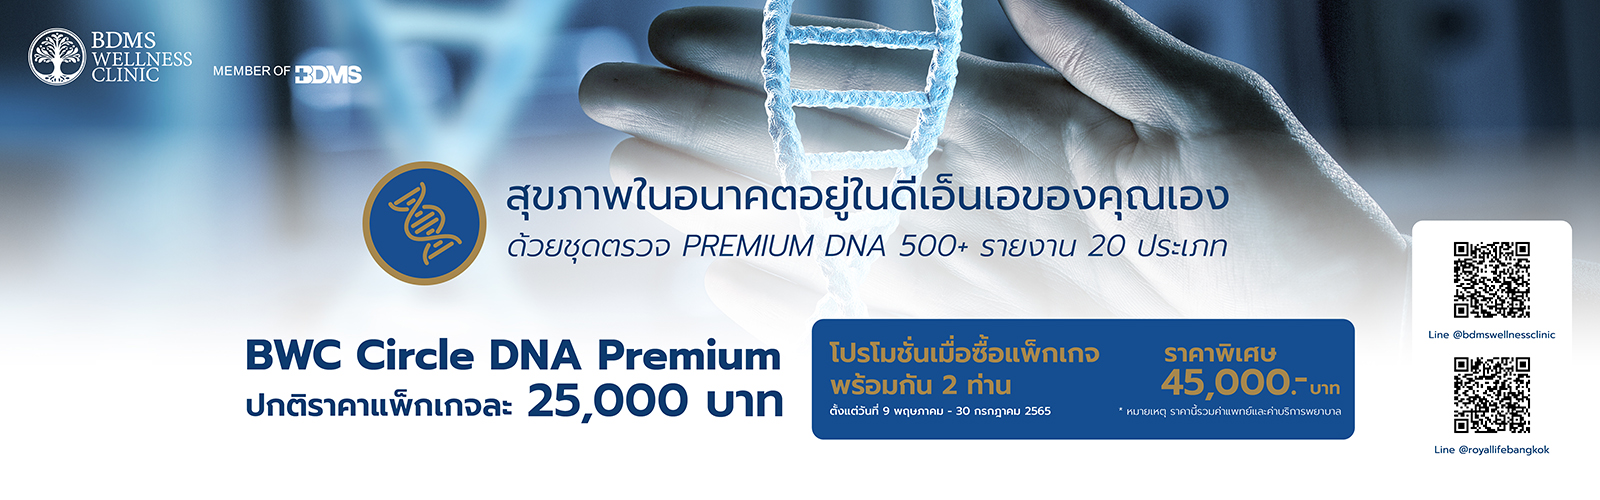 BWC Circle DNA Premium